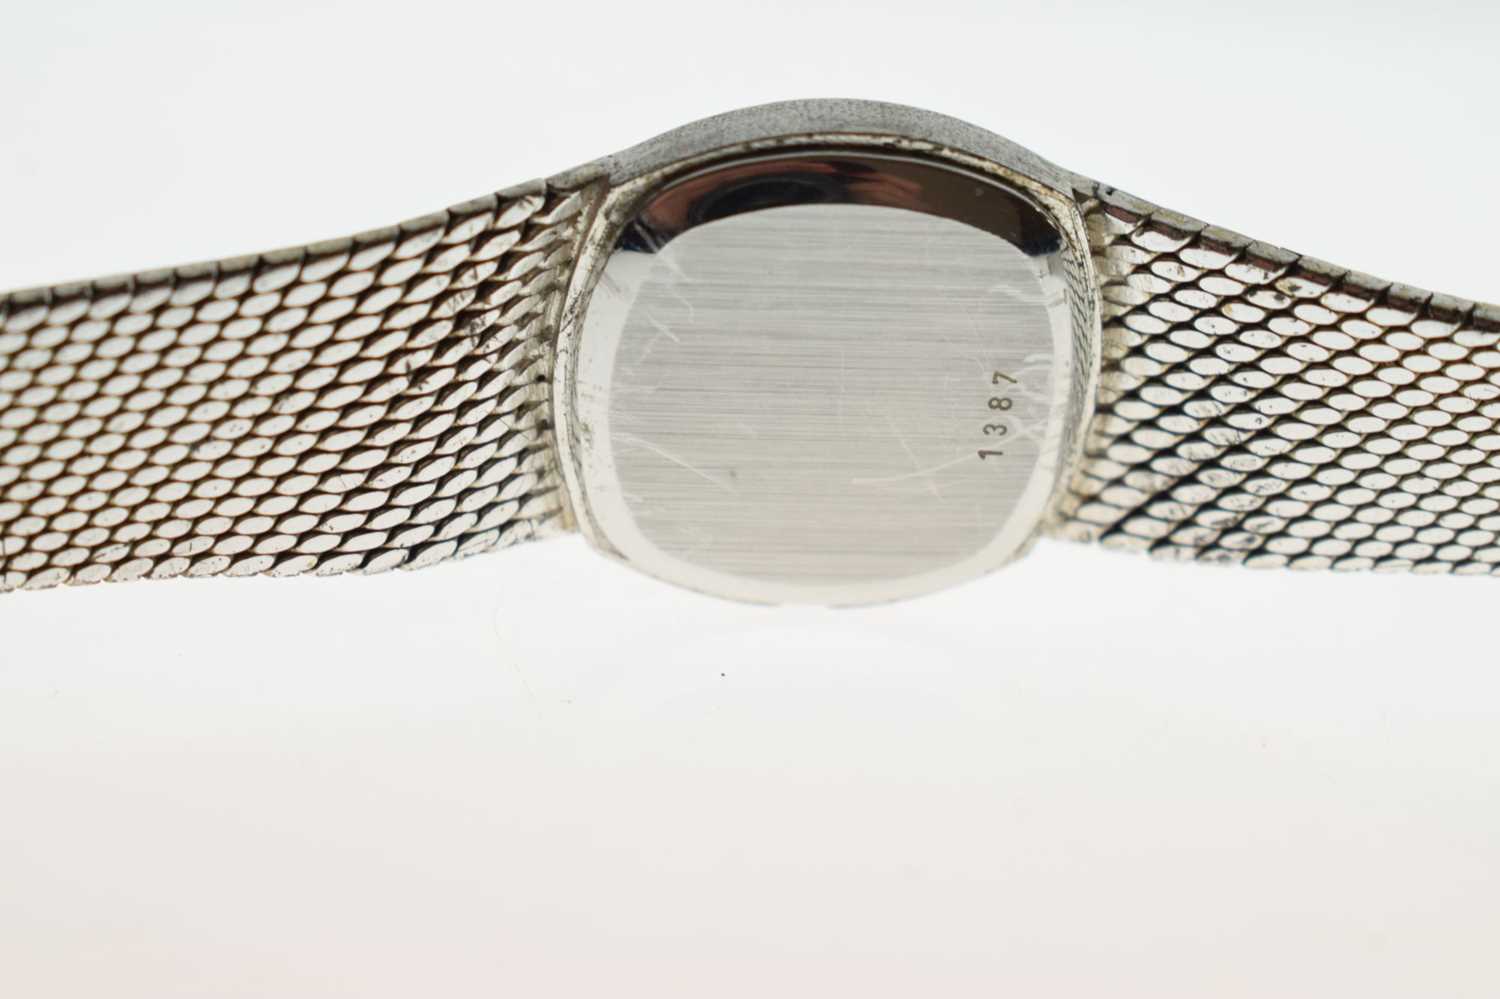 Omega - Lady's De Ville silver '925' bracelet watch - Image 8 of 9